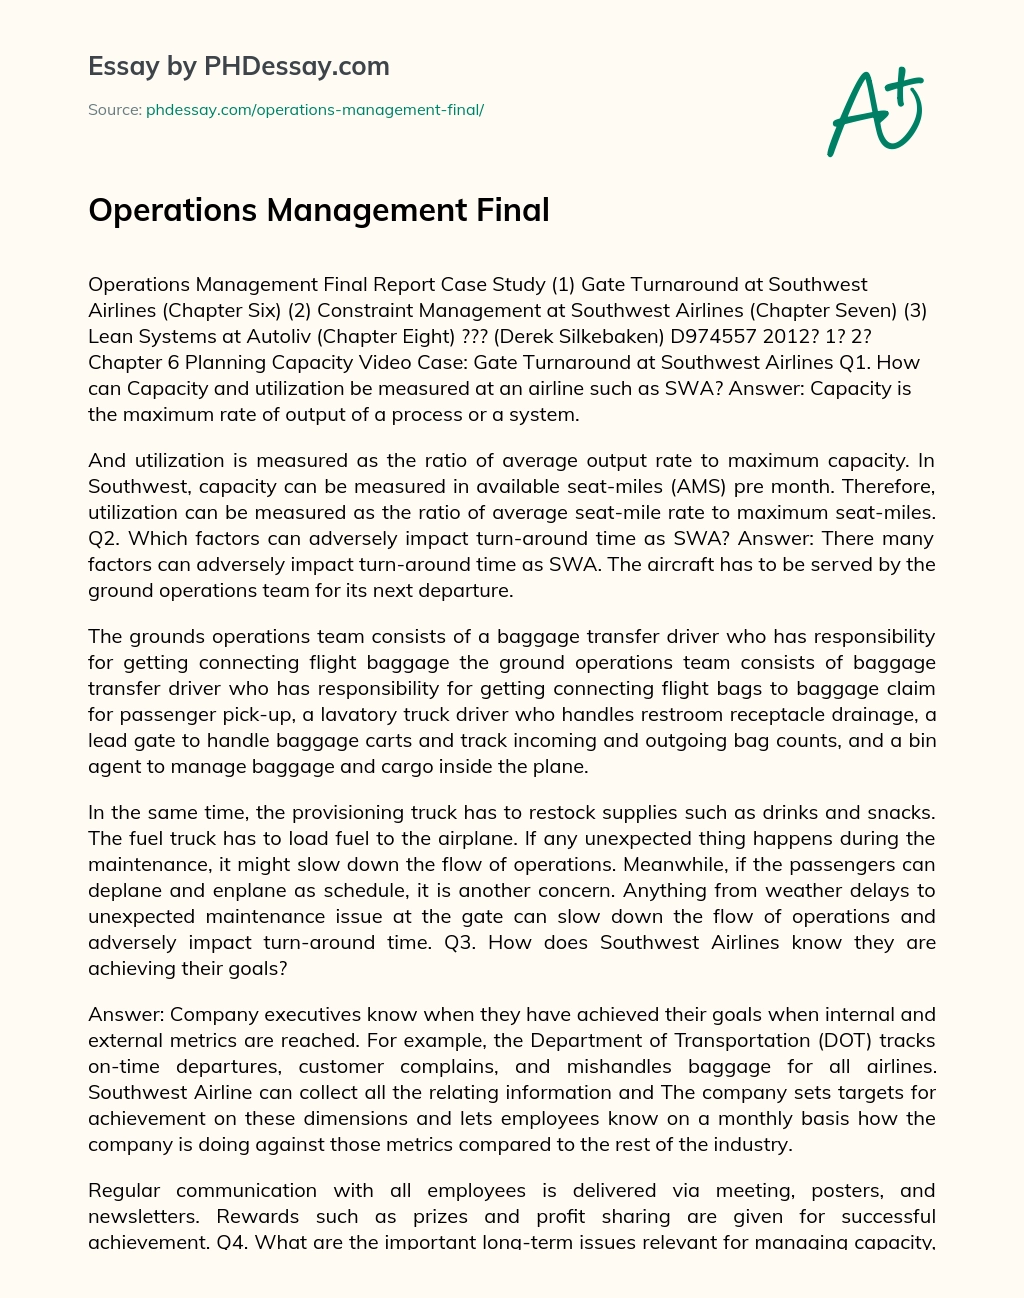 Operations Management Final essay